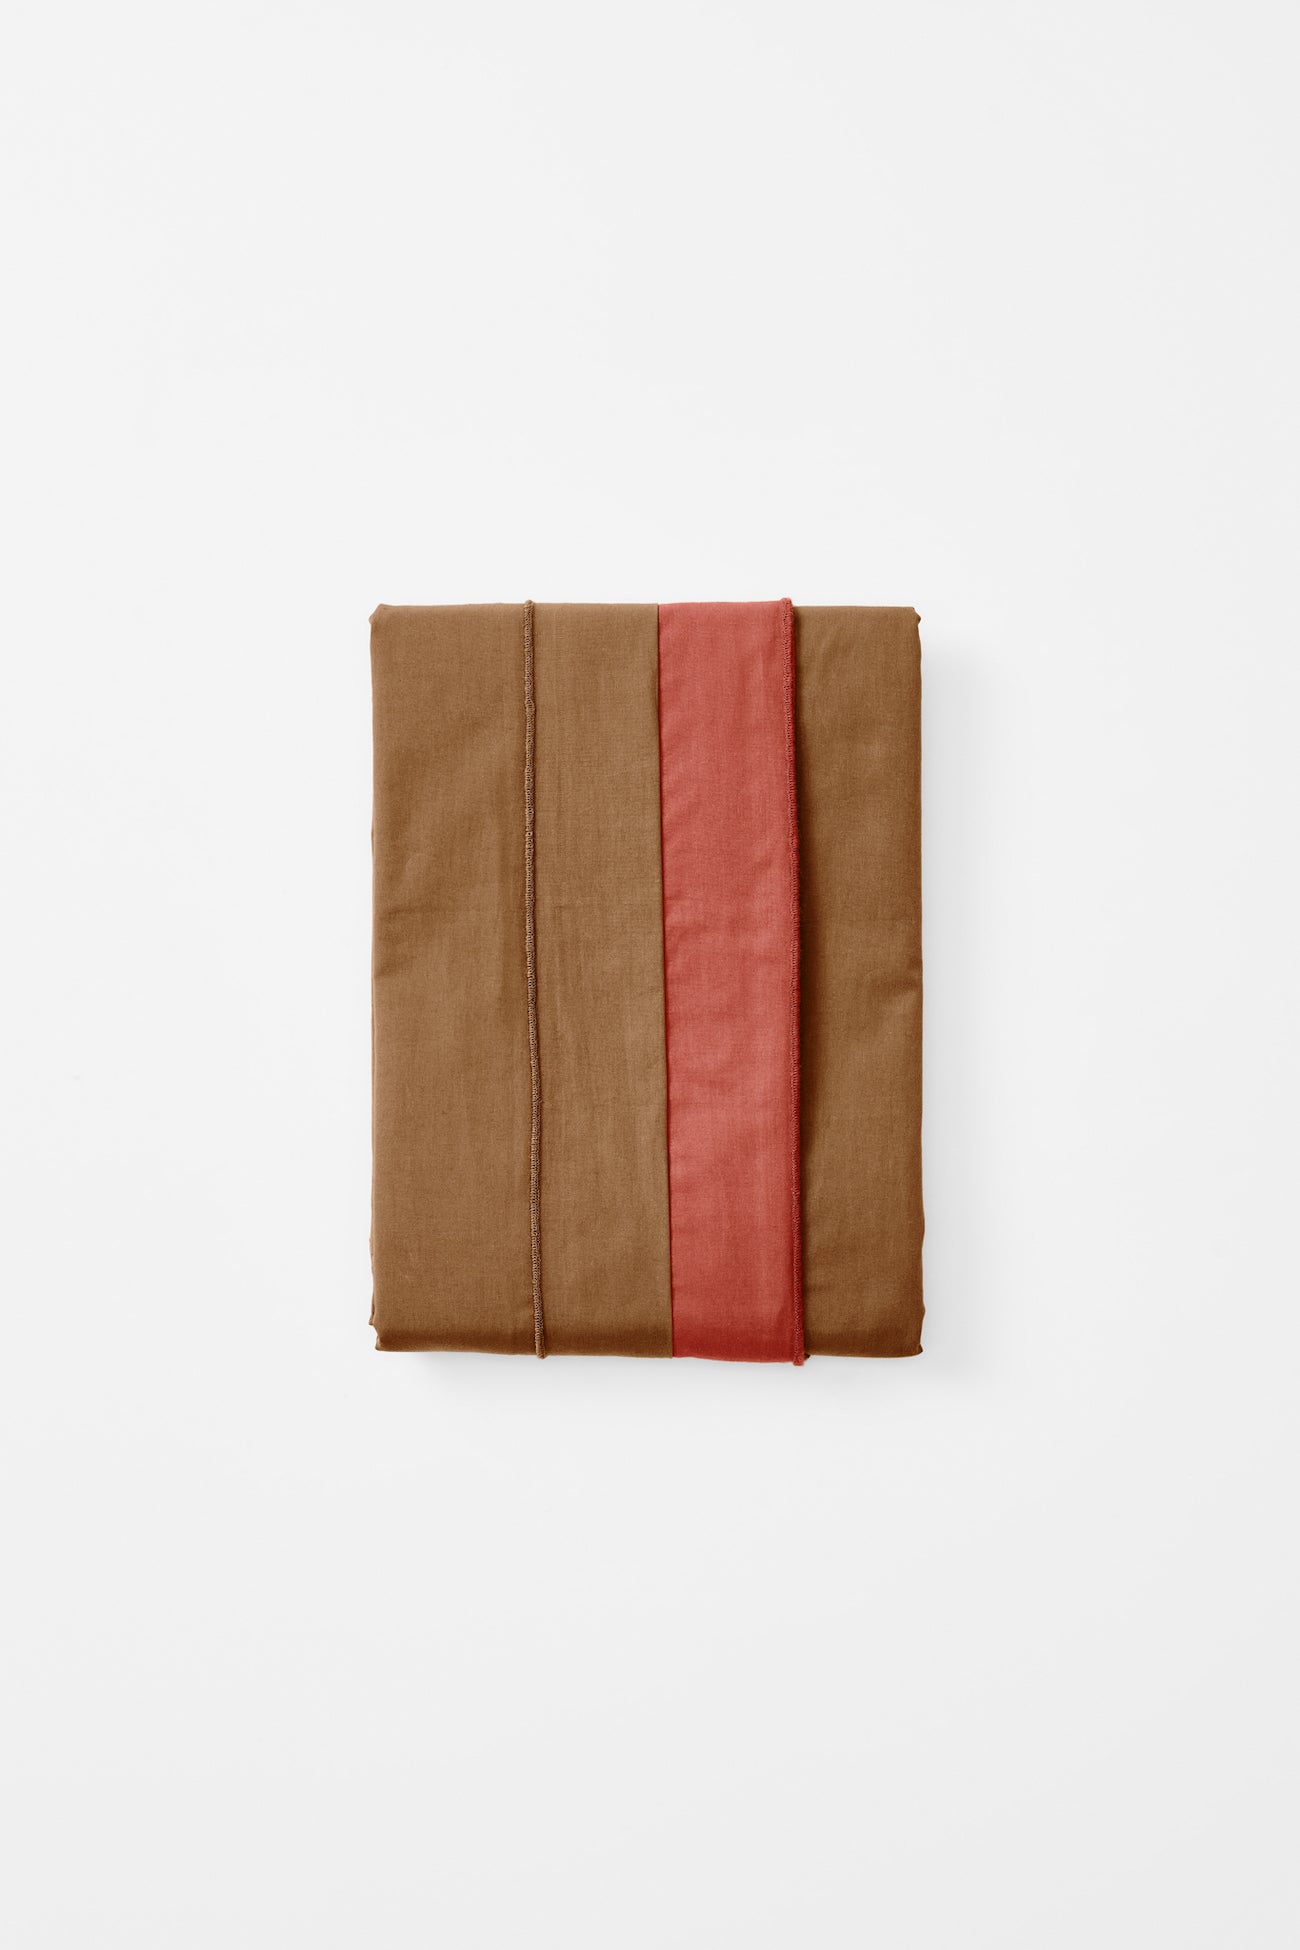 Pillowcase Pair in Bi Colour - Carob and Ochre Red